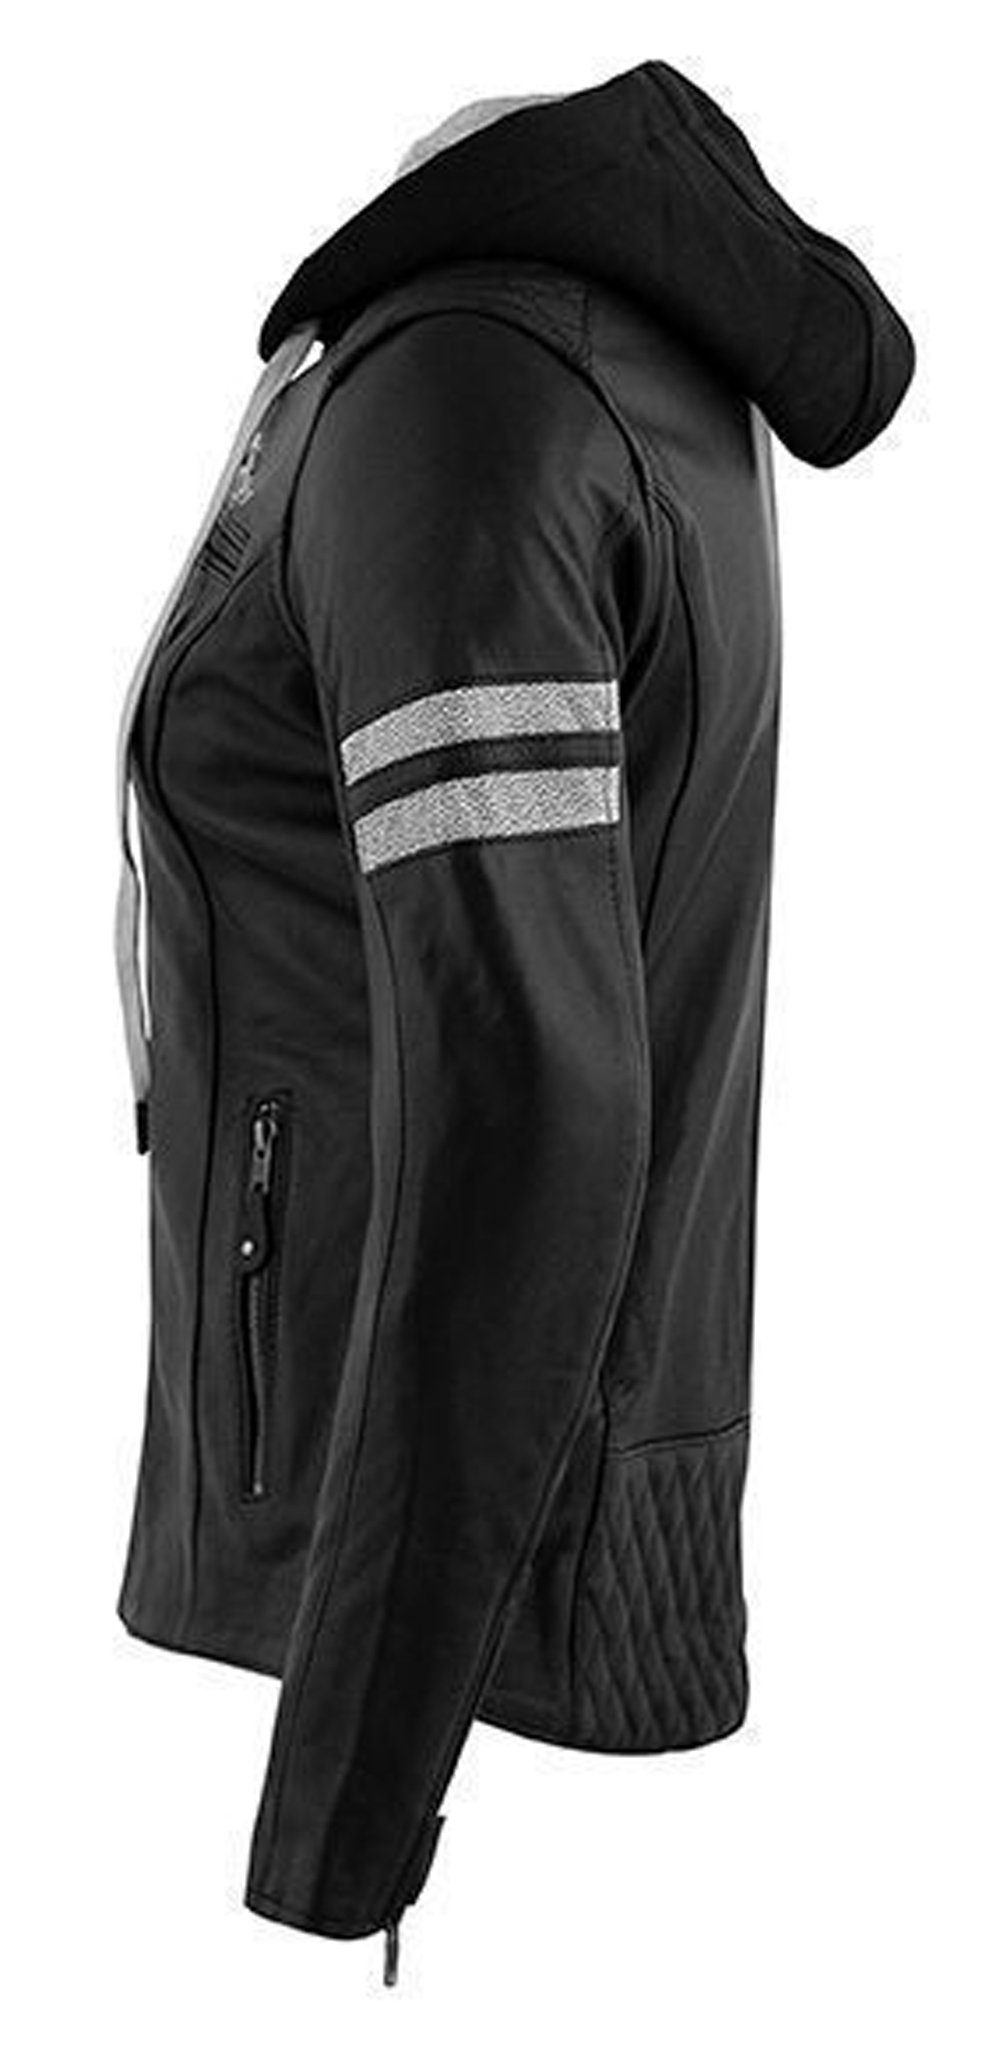 (Gr. Damen mit Stitches Protektoren Rusty schwarz-weiß 48-56) Urban-Style Hooded Super Motorradjacke Leder Joyce Motorradjacke